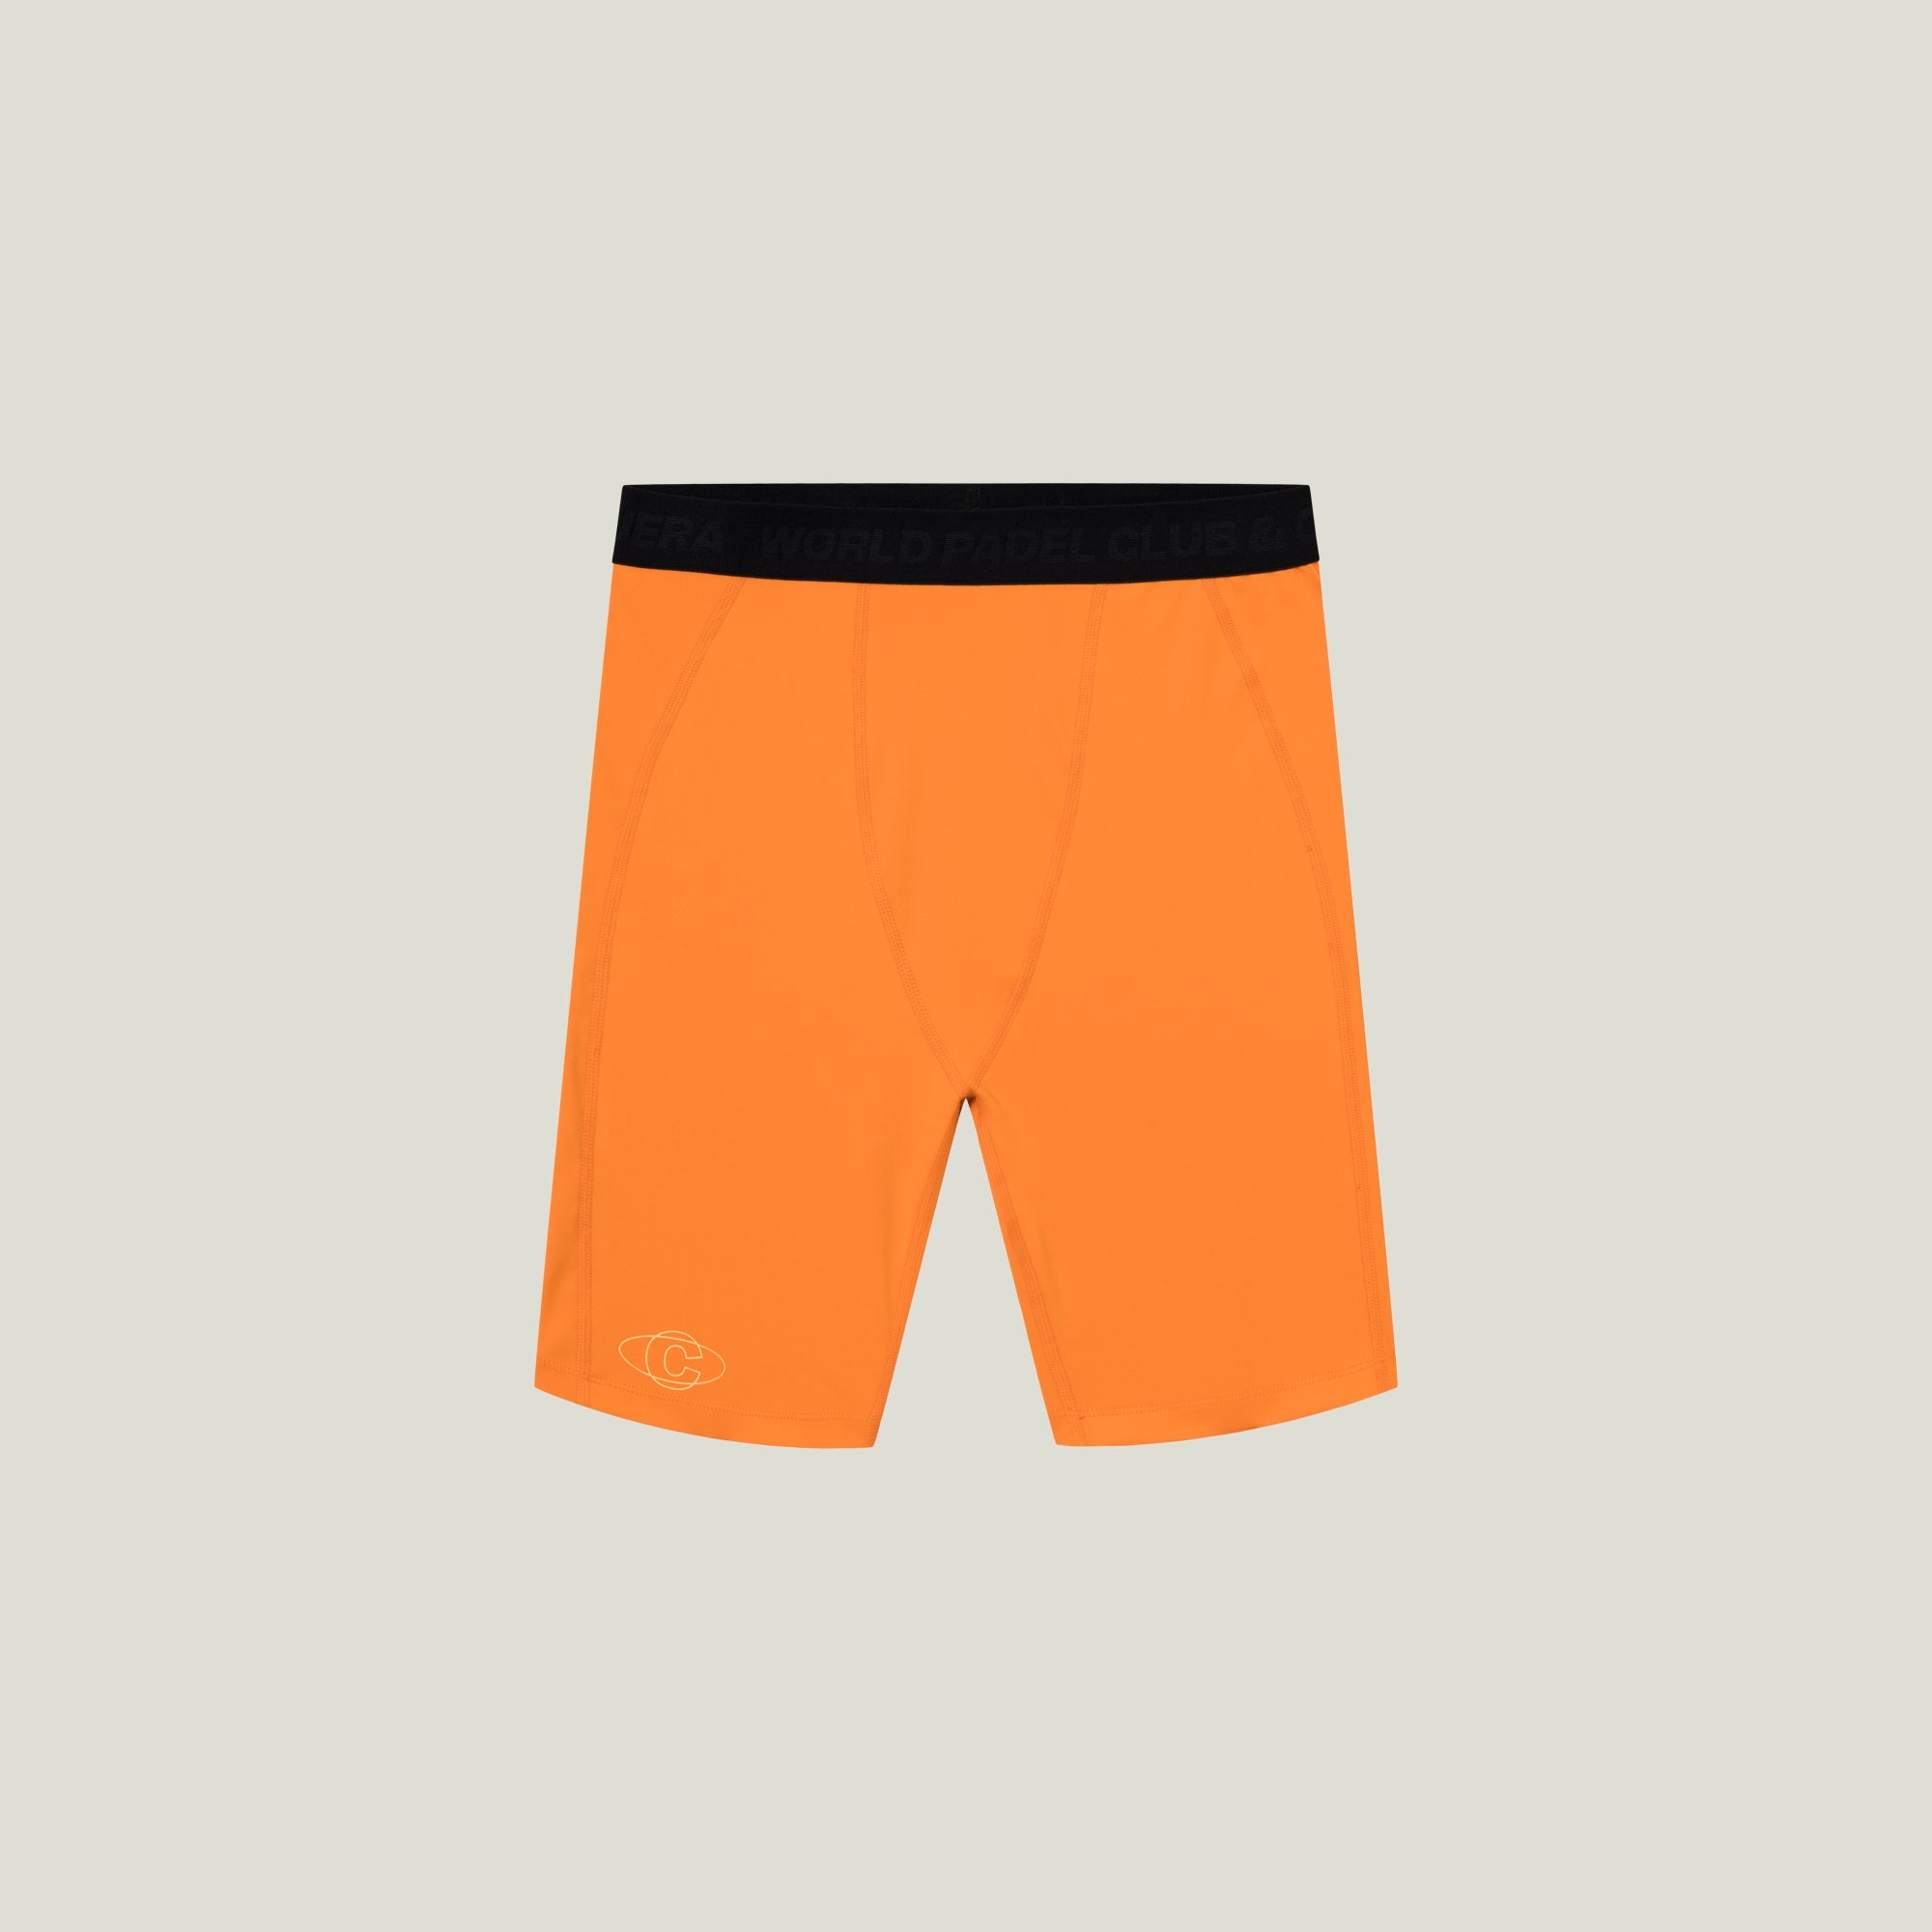 Se Cuera Oncourt Layer Tights (Orange) - XL hos Padellife